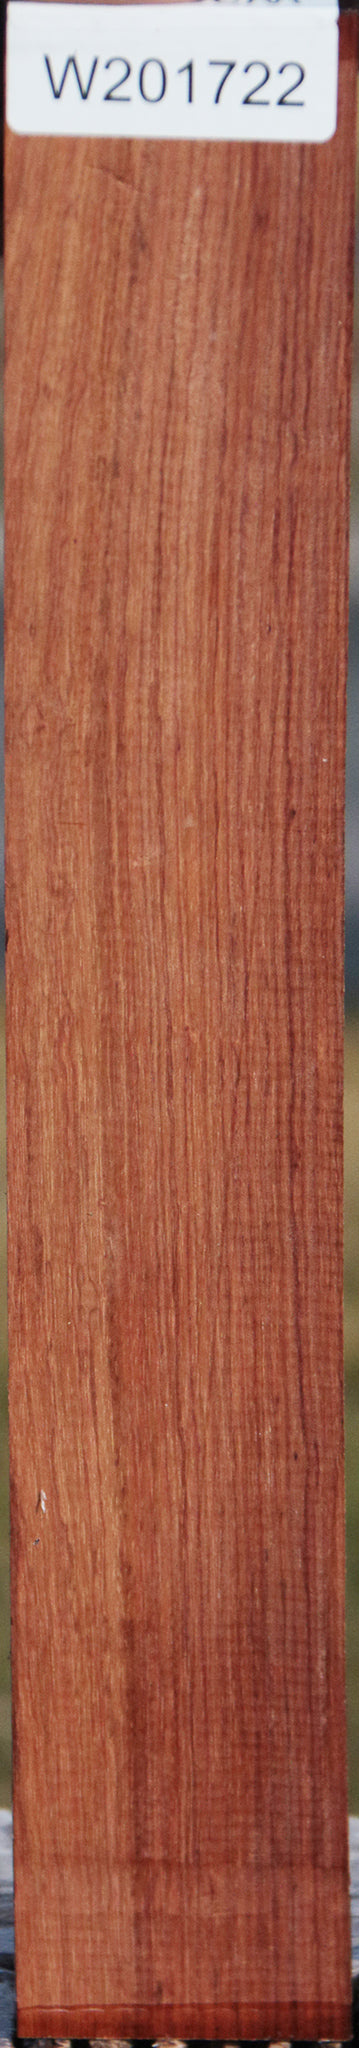 Honduras Rosewood Lumber